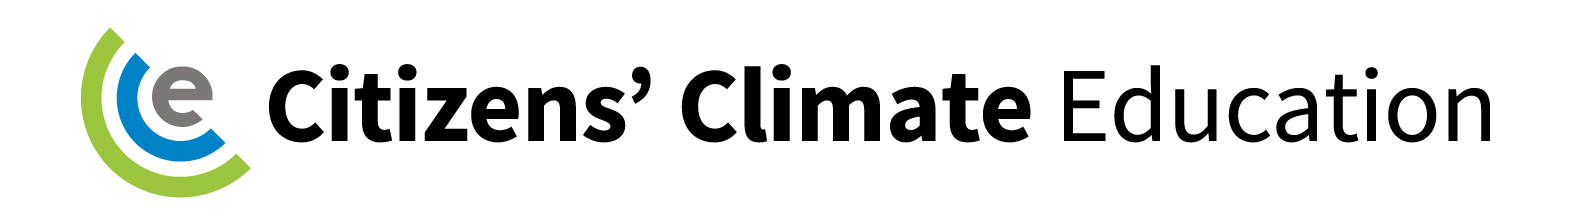 Citizens' Climate Education logo